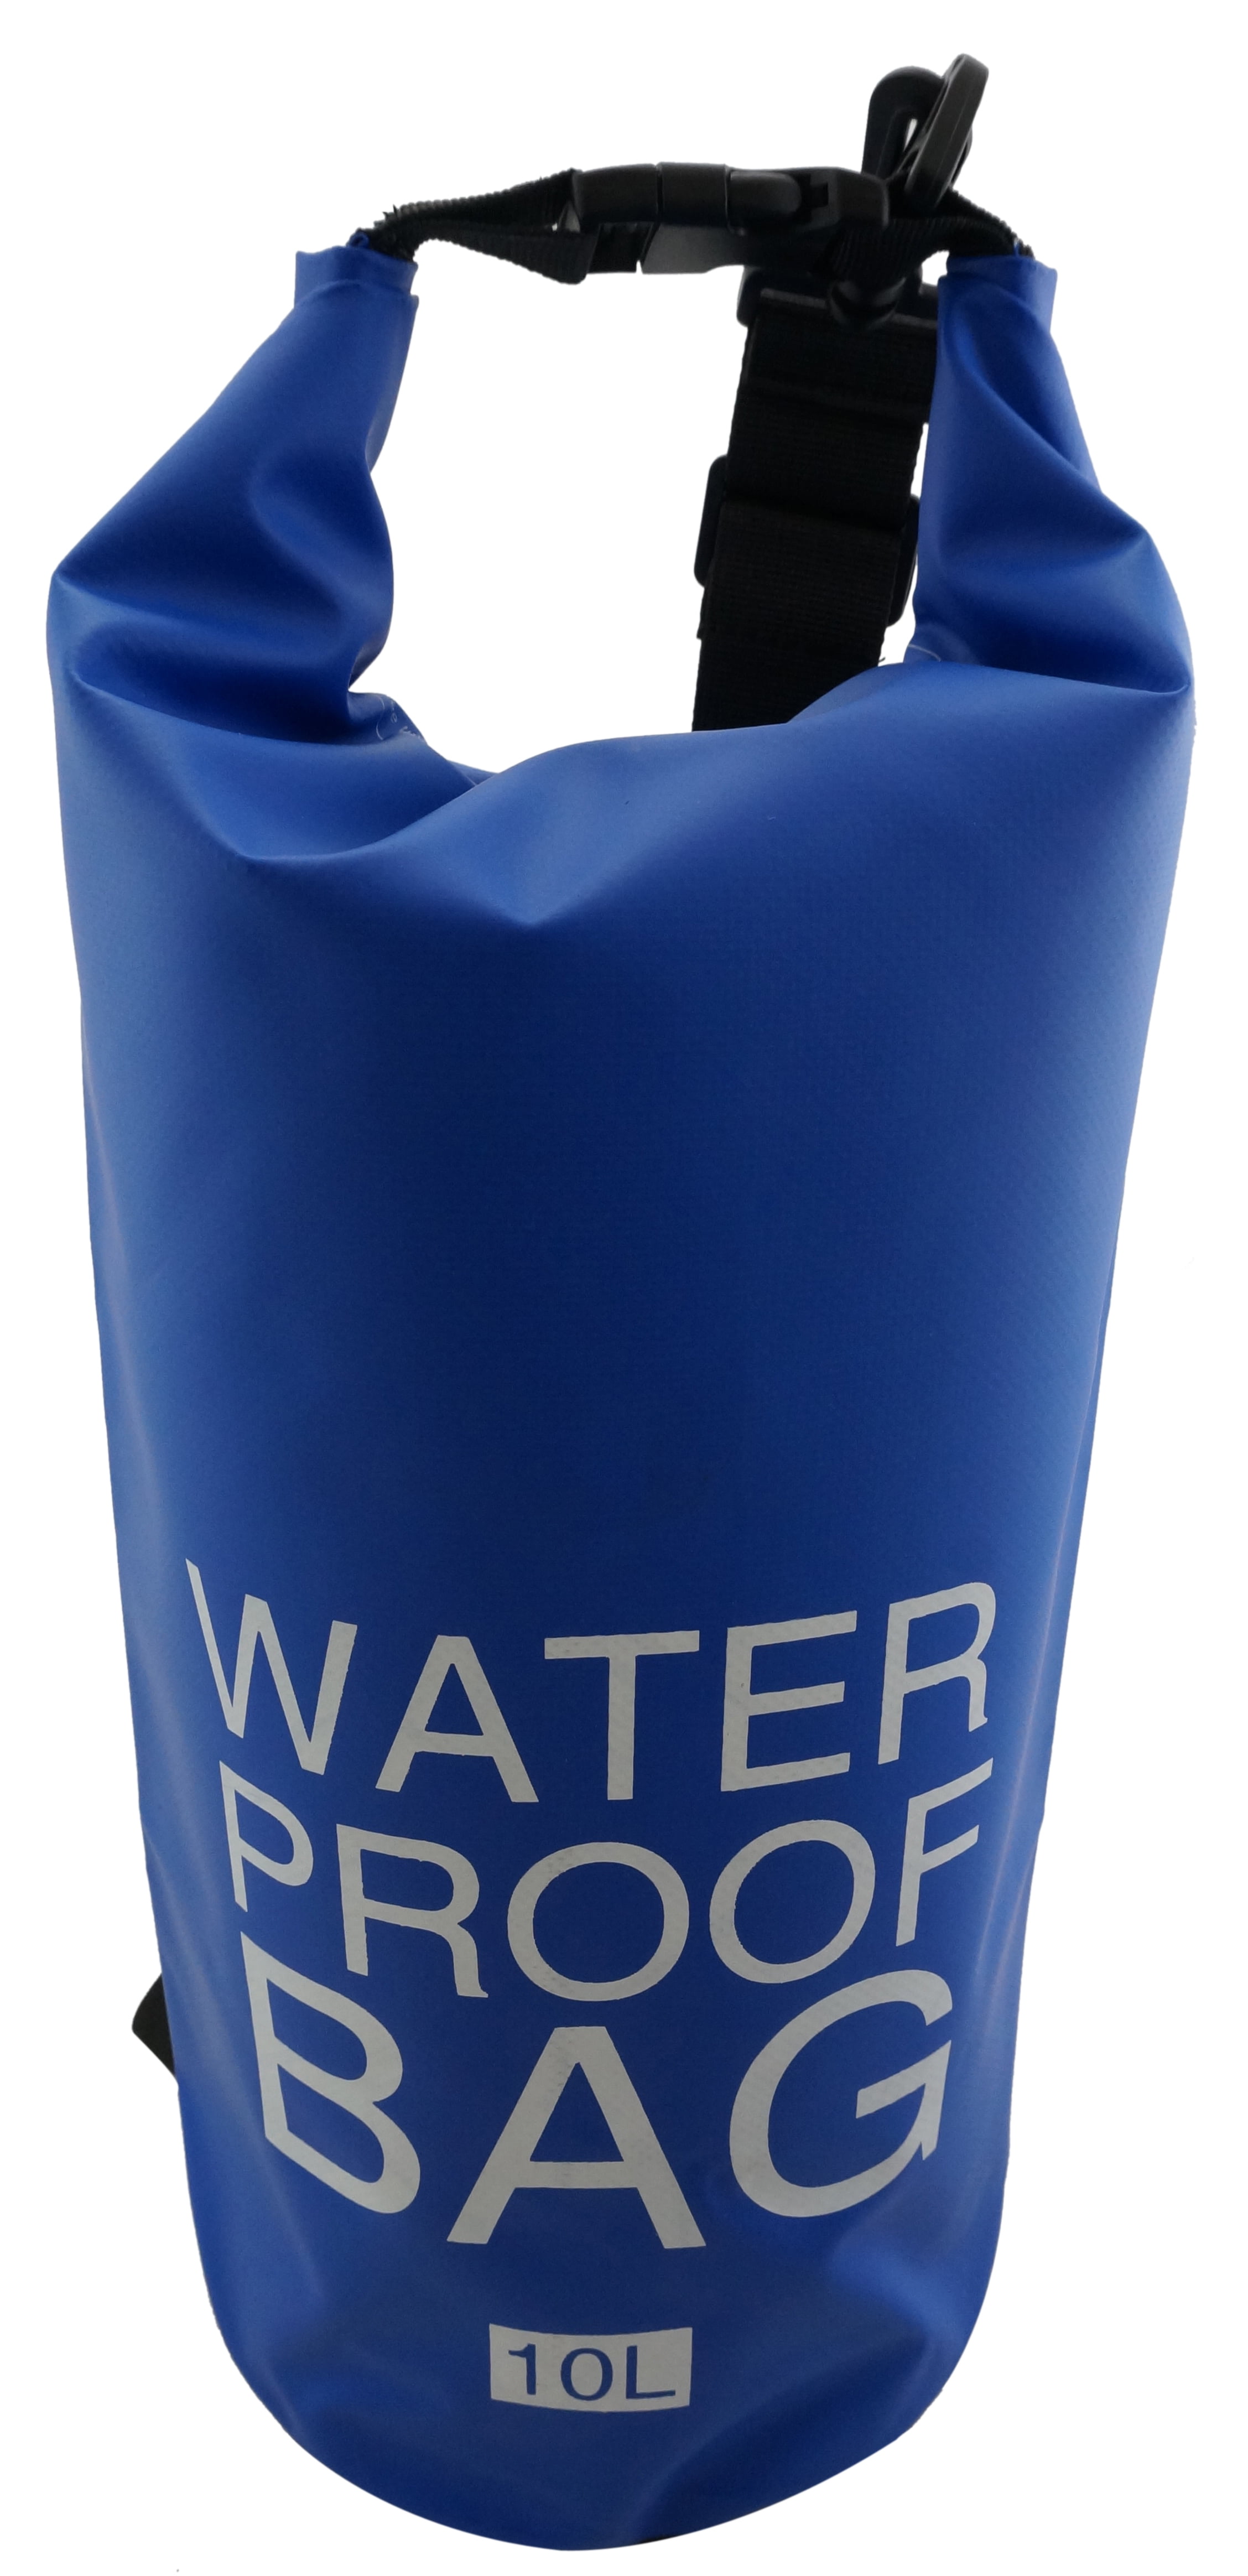 Kit Bag for Canoeing Kayaking 5 Liter Heavy Duty Waterproof Floating Dry Sack 